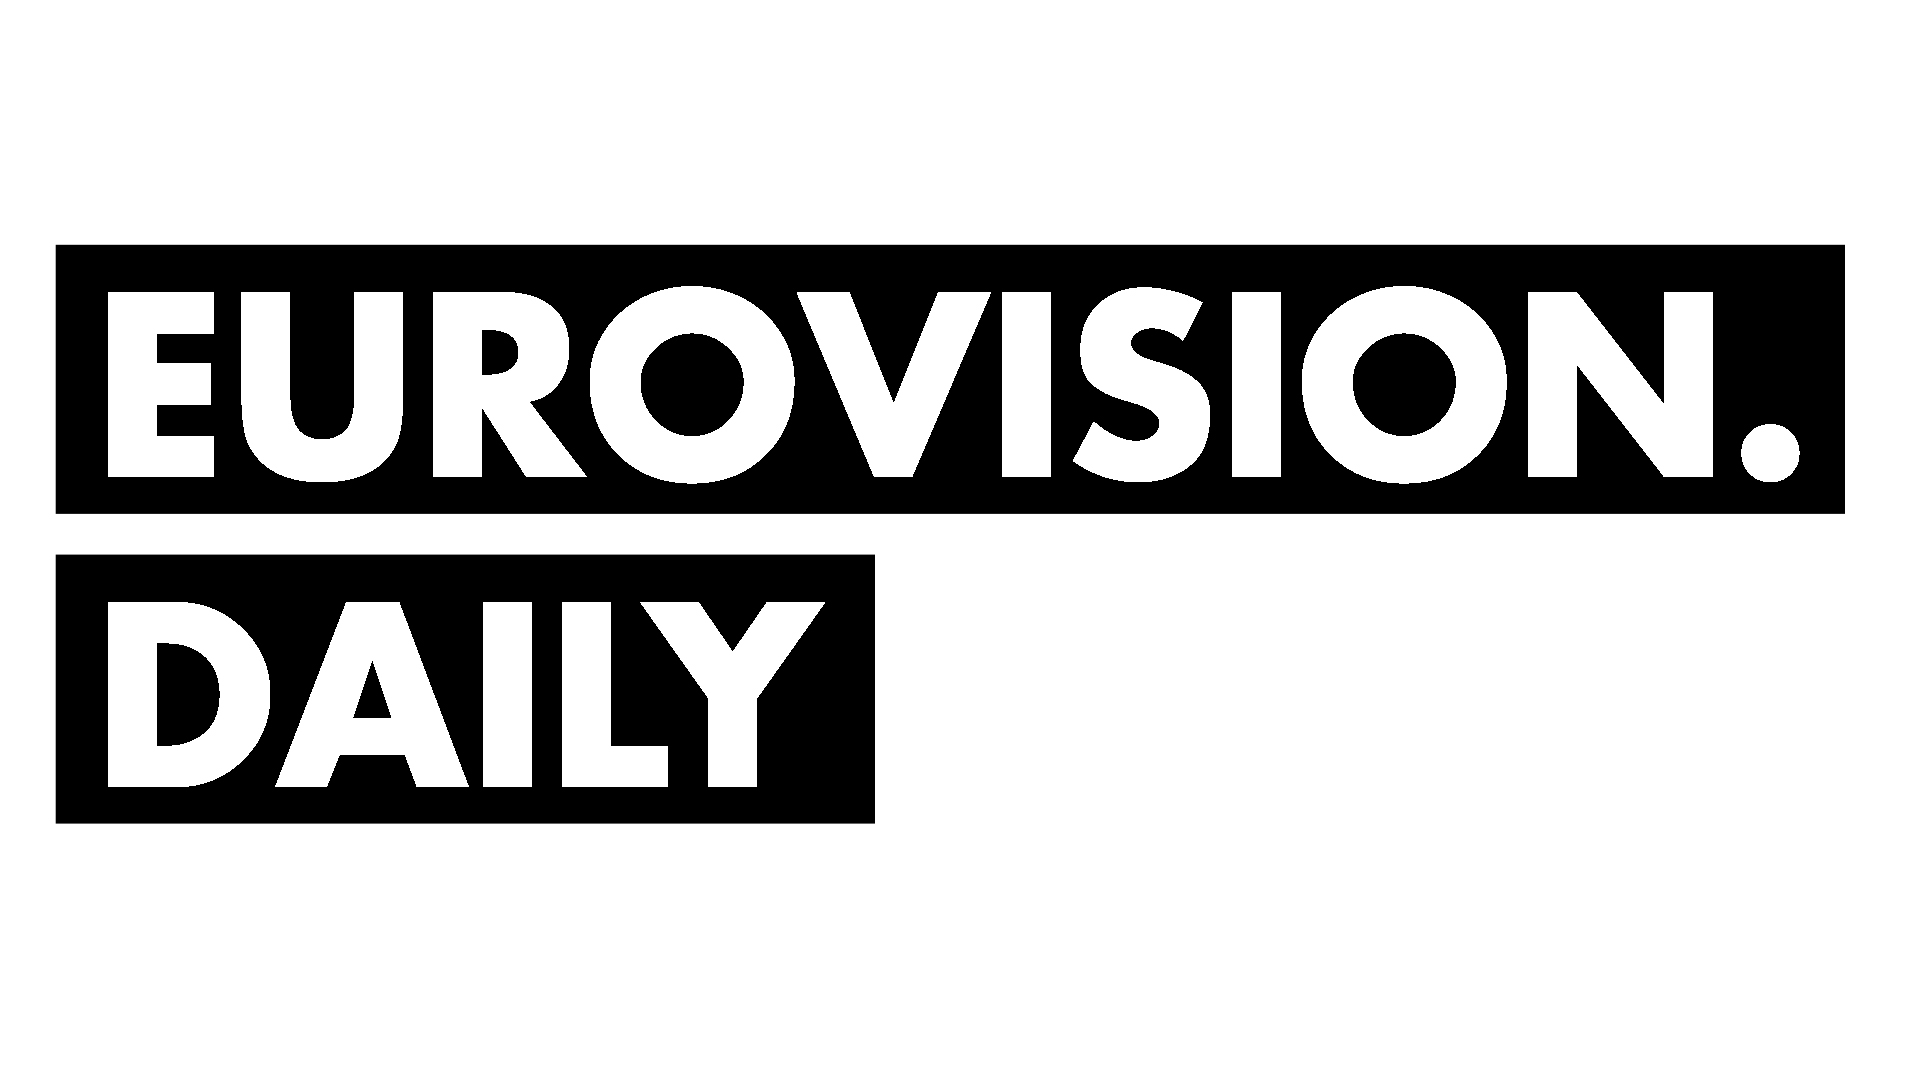 Eurovision Daily – Final de Temporada